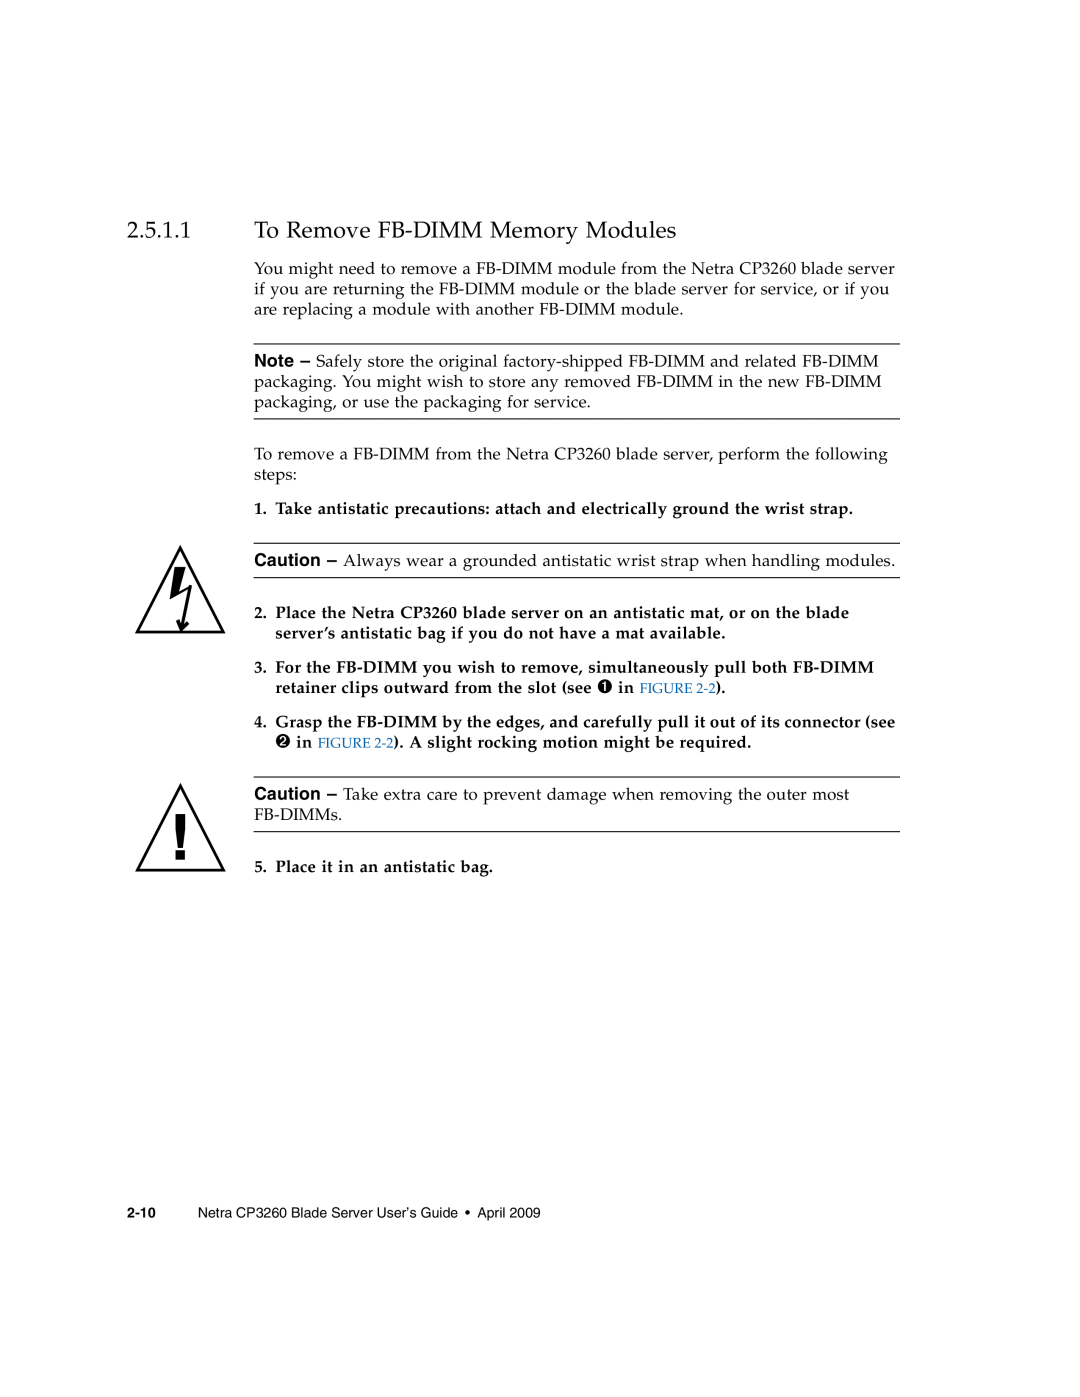 Sun Microsystems CP3260 manual To Remove FB-DIMM Memory Modules 